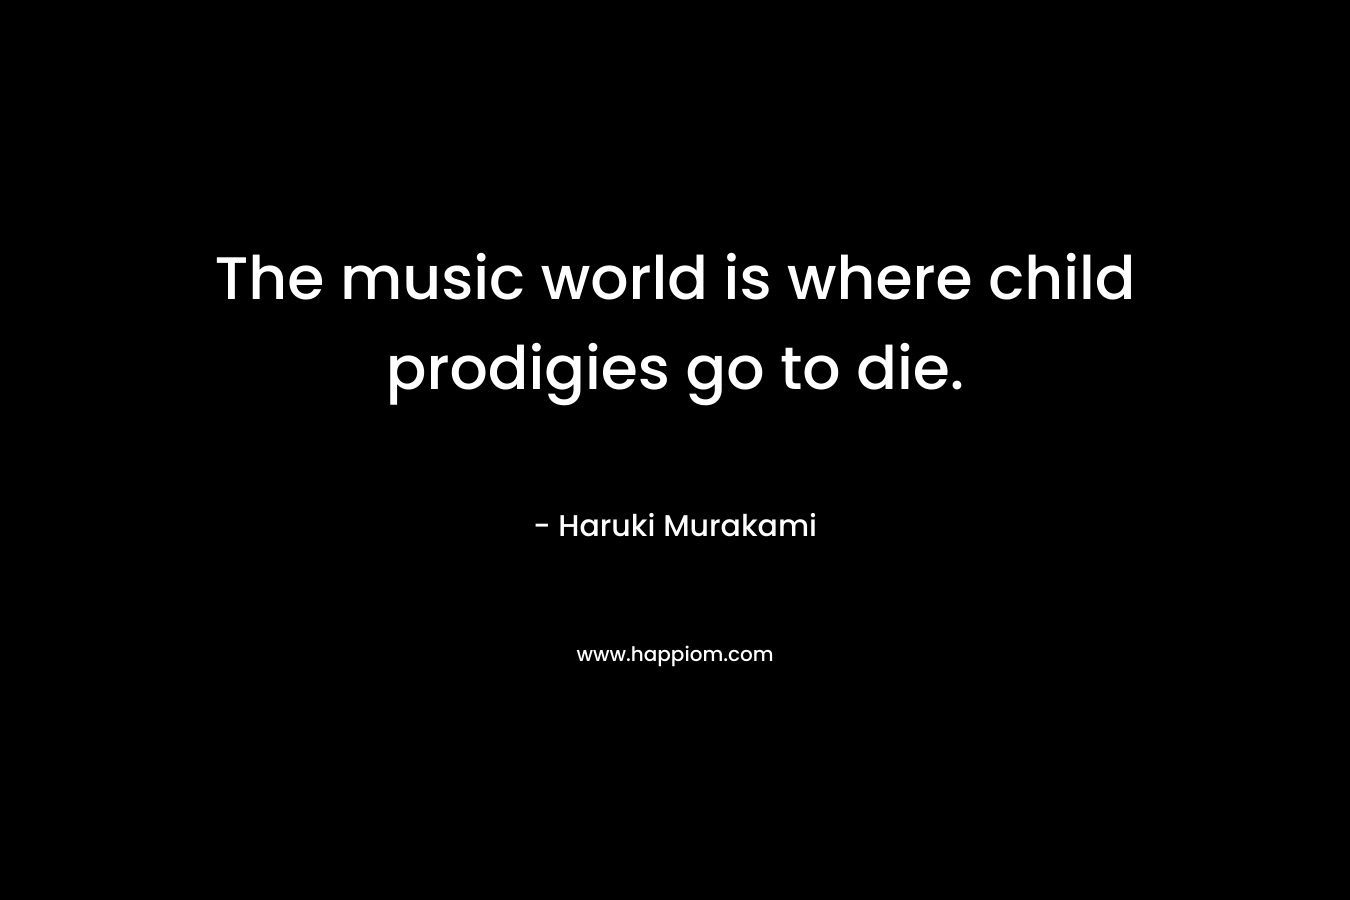 The music world is where child prodigies go to die.